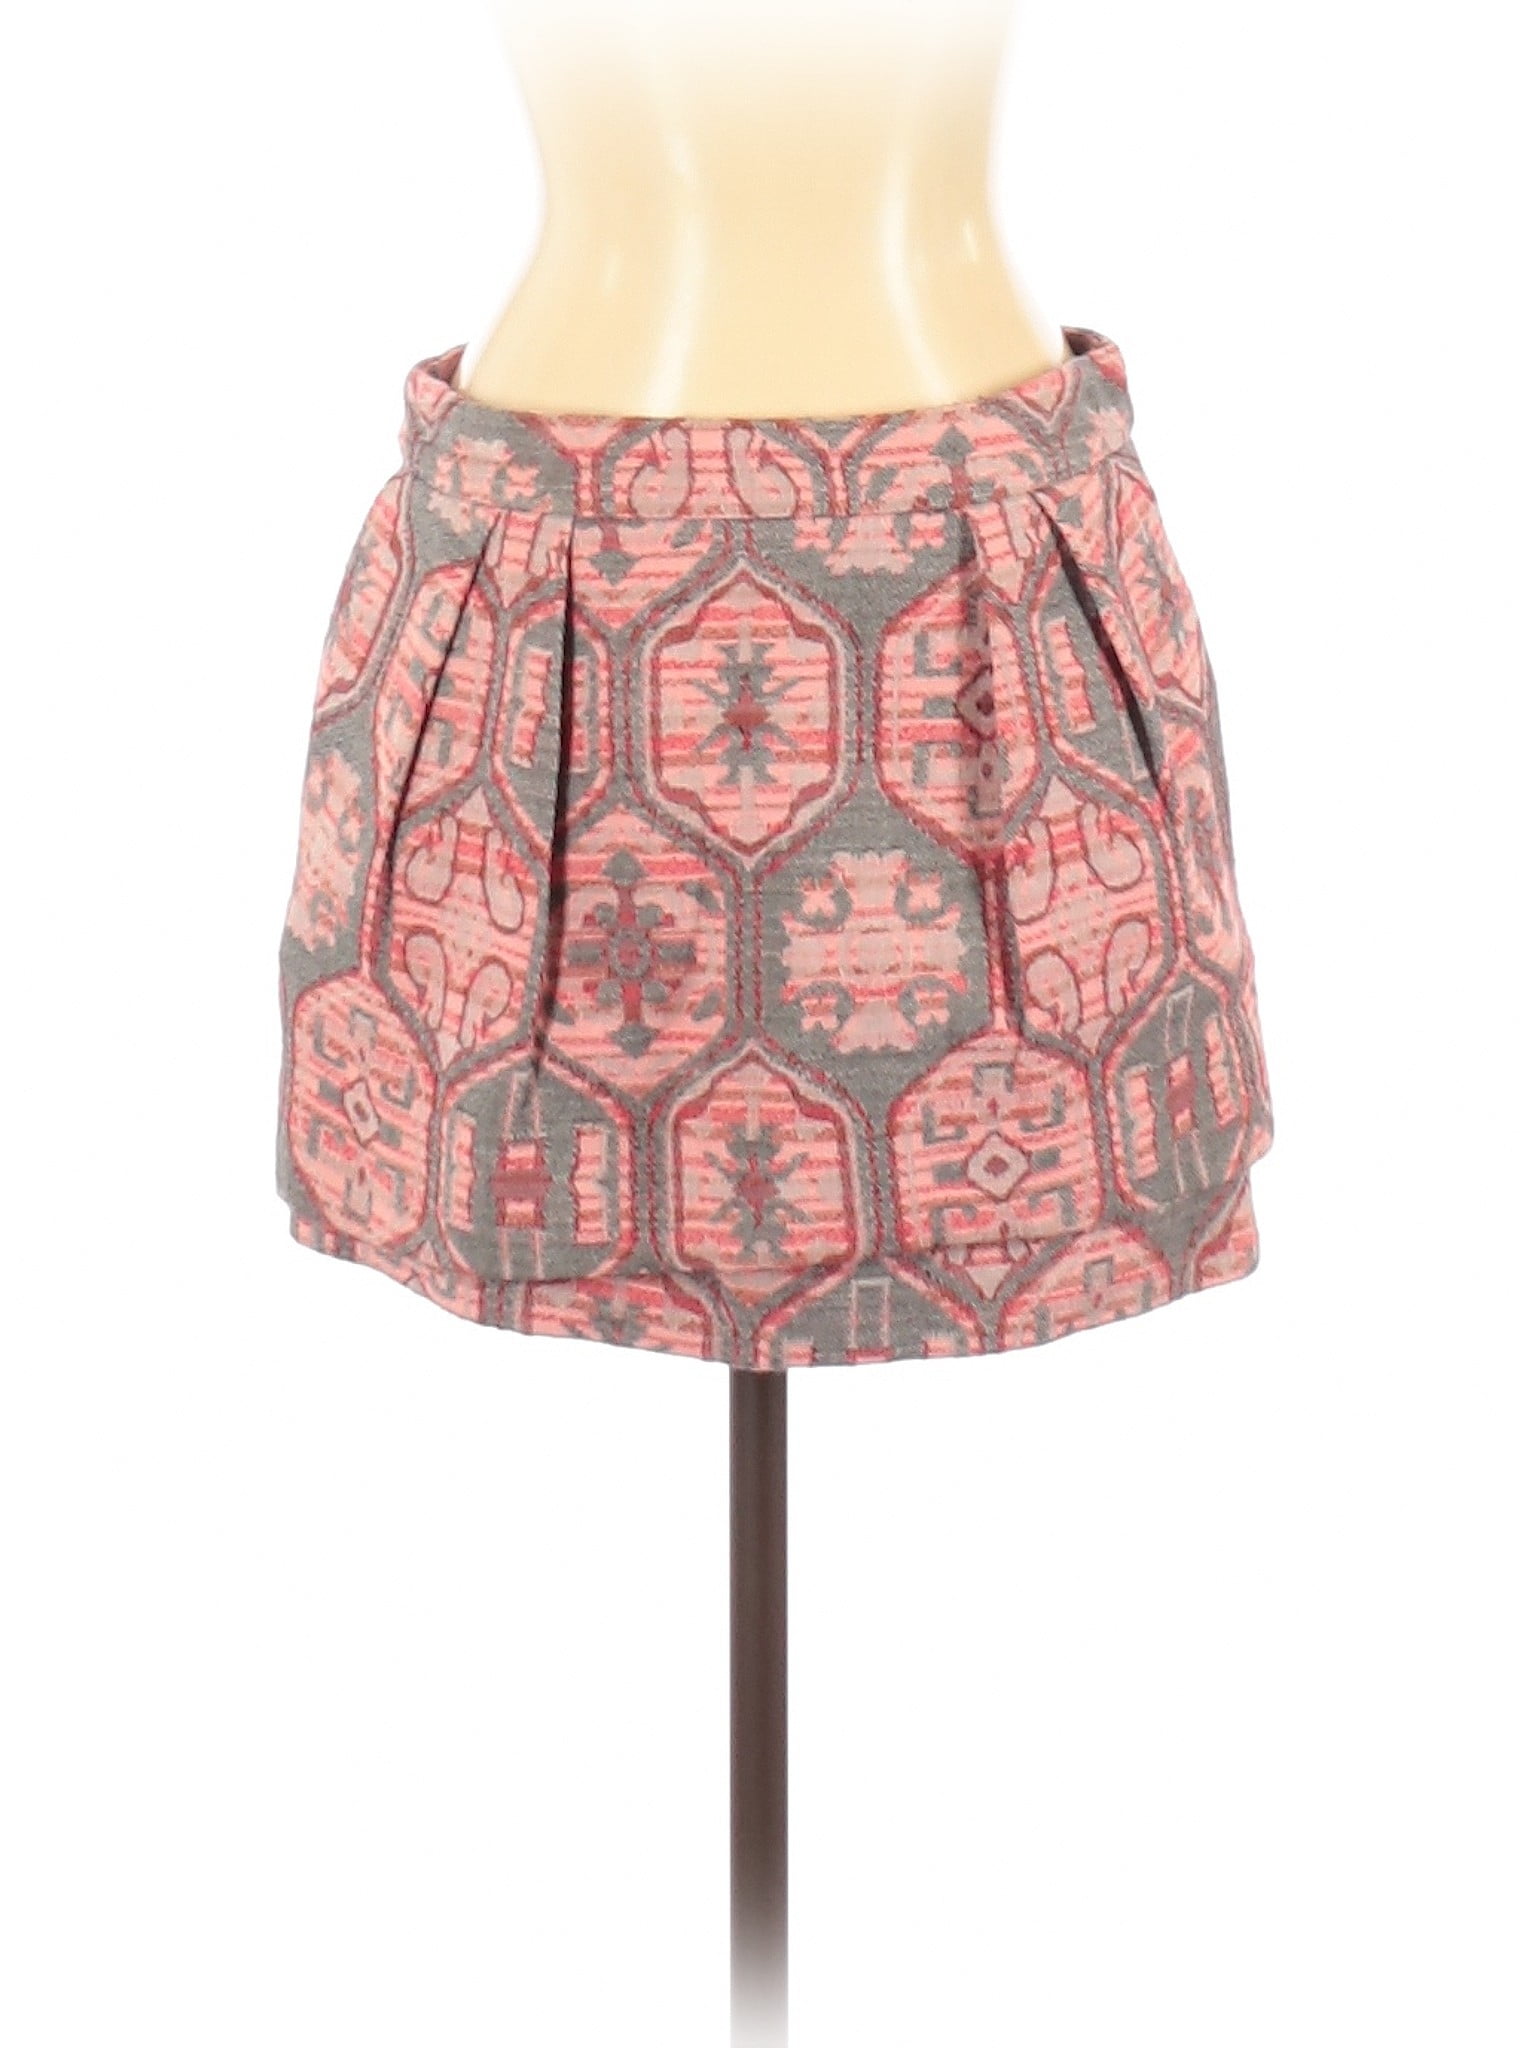 Maje - Pre-Owned Maje Women's Size 36 Casual Skirt - Walmart.com ...